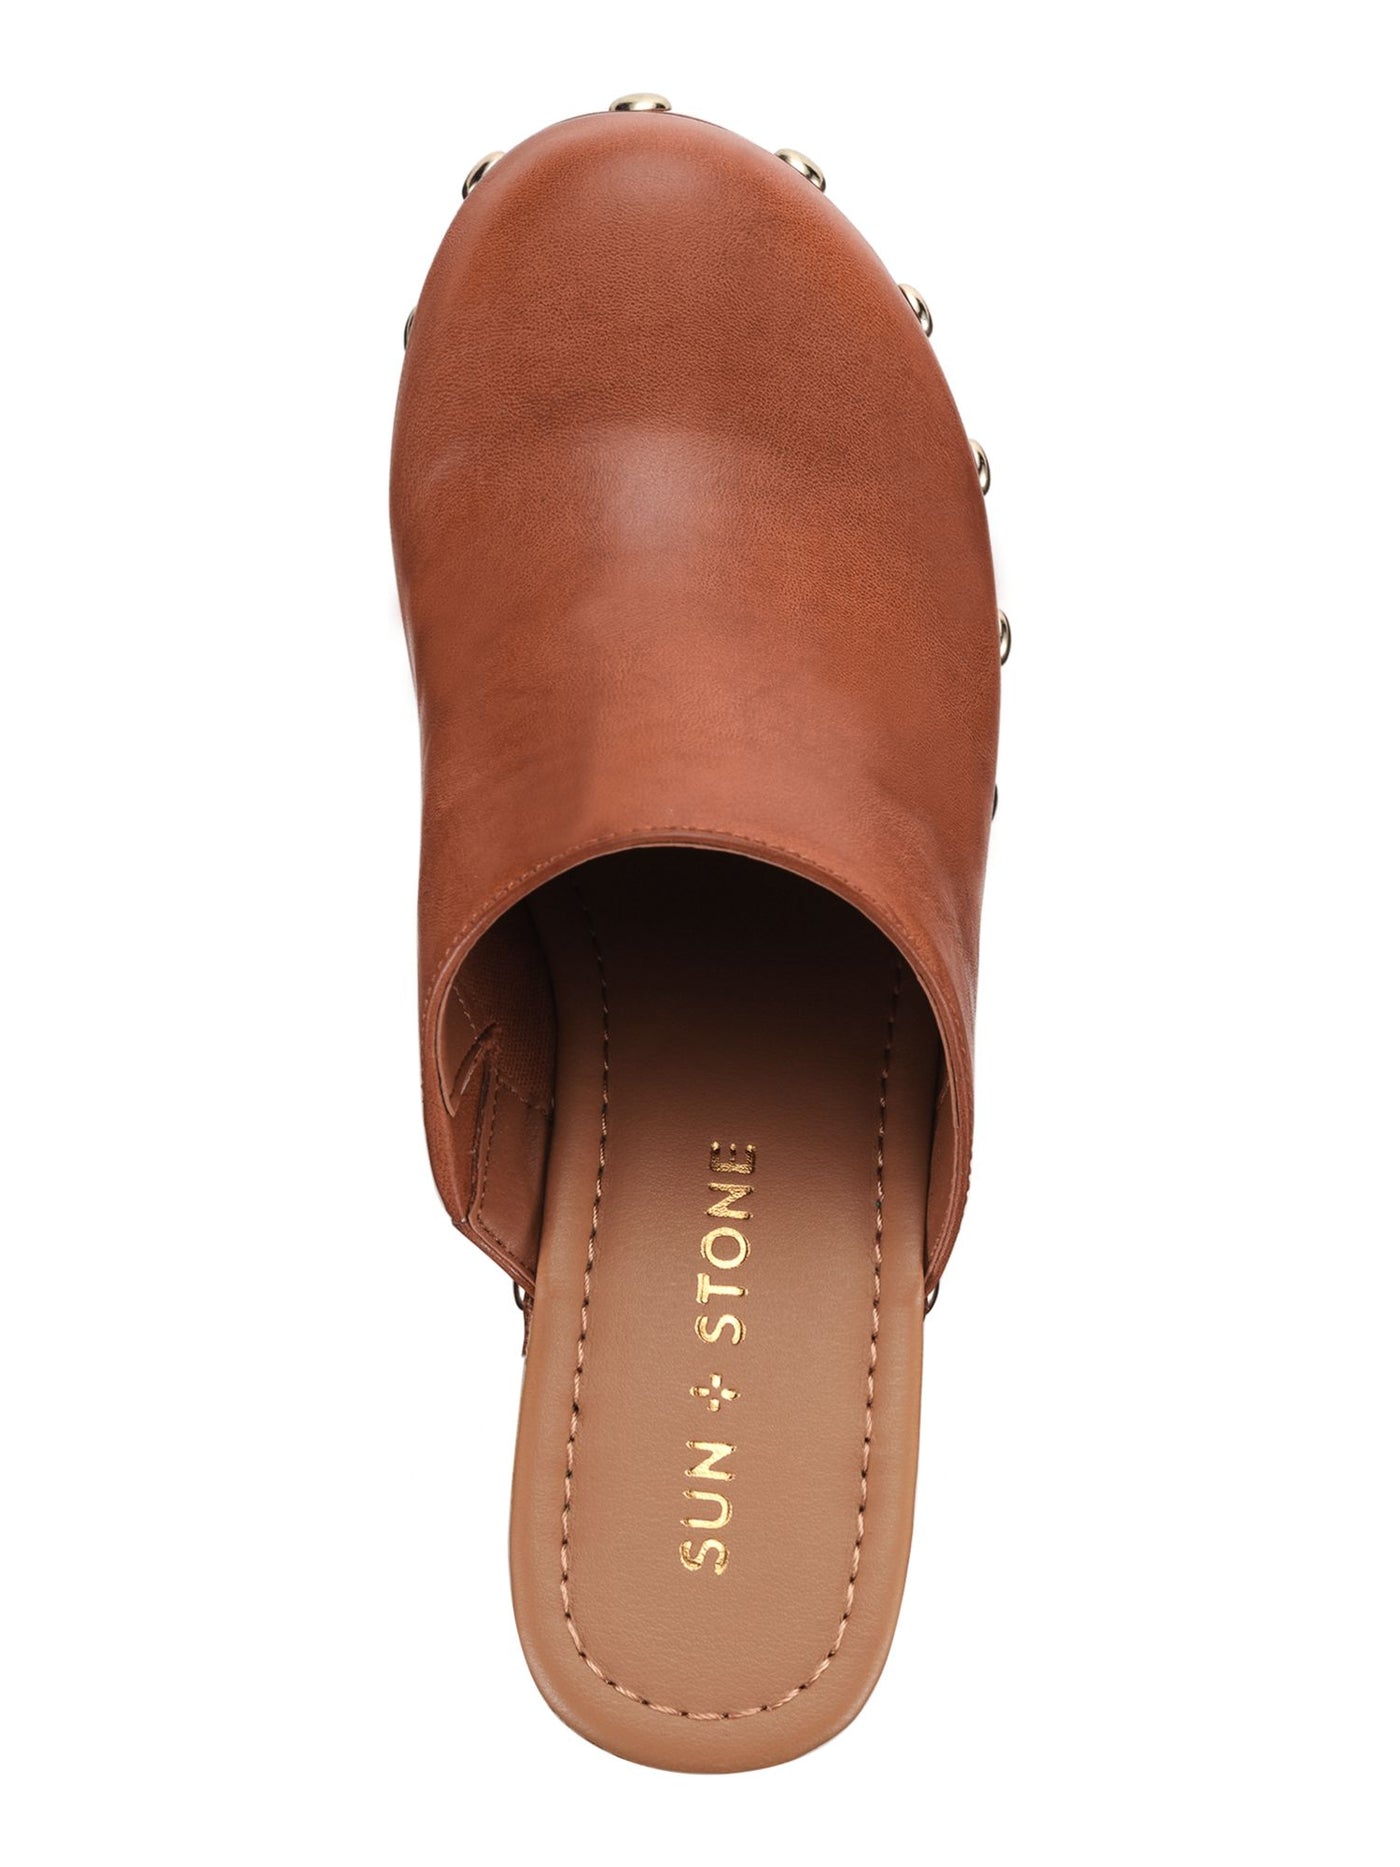 SUN STONE Womens Brown 1" Platform Goring Studded Padded Taanya Round Toe Block Heel Slip On Clogs Shoes 9.5 M